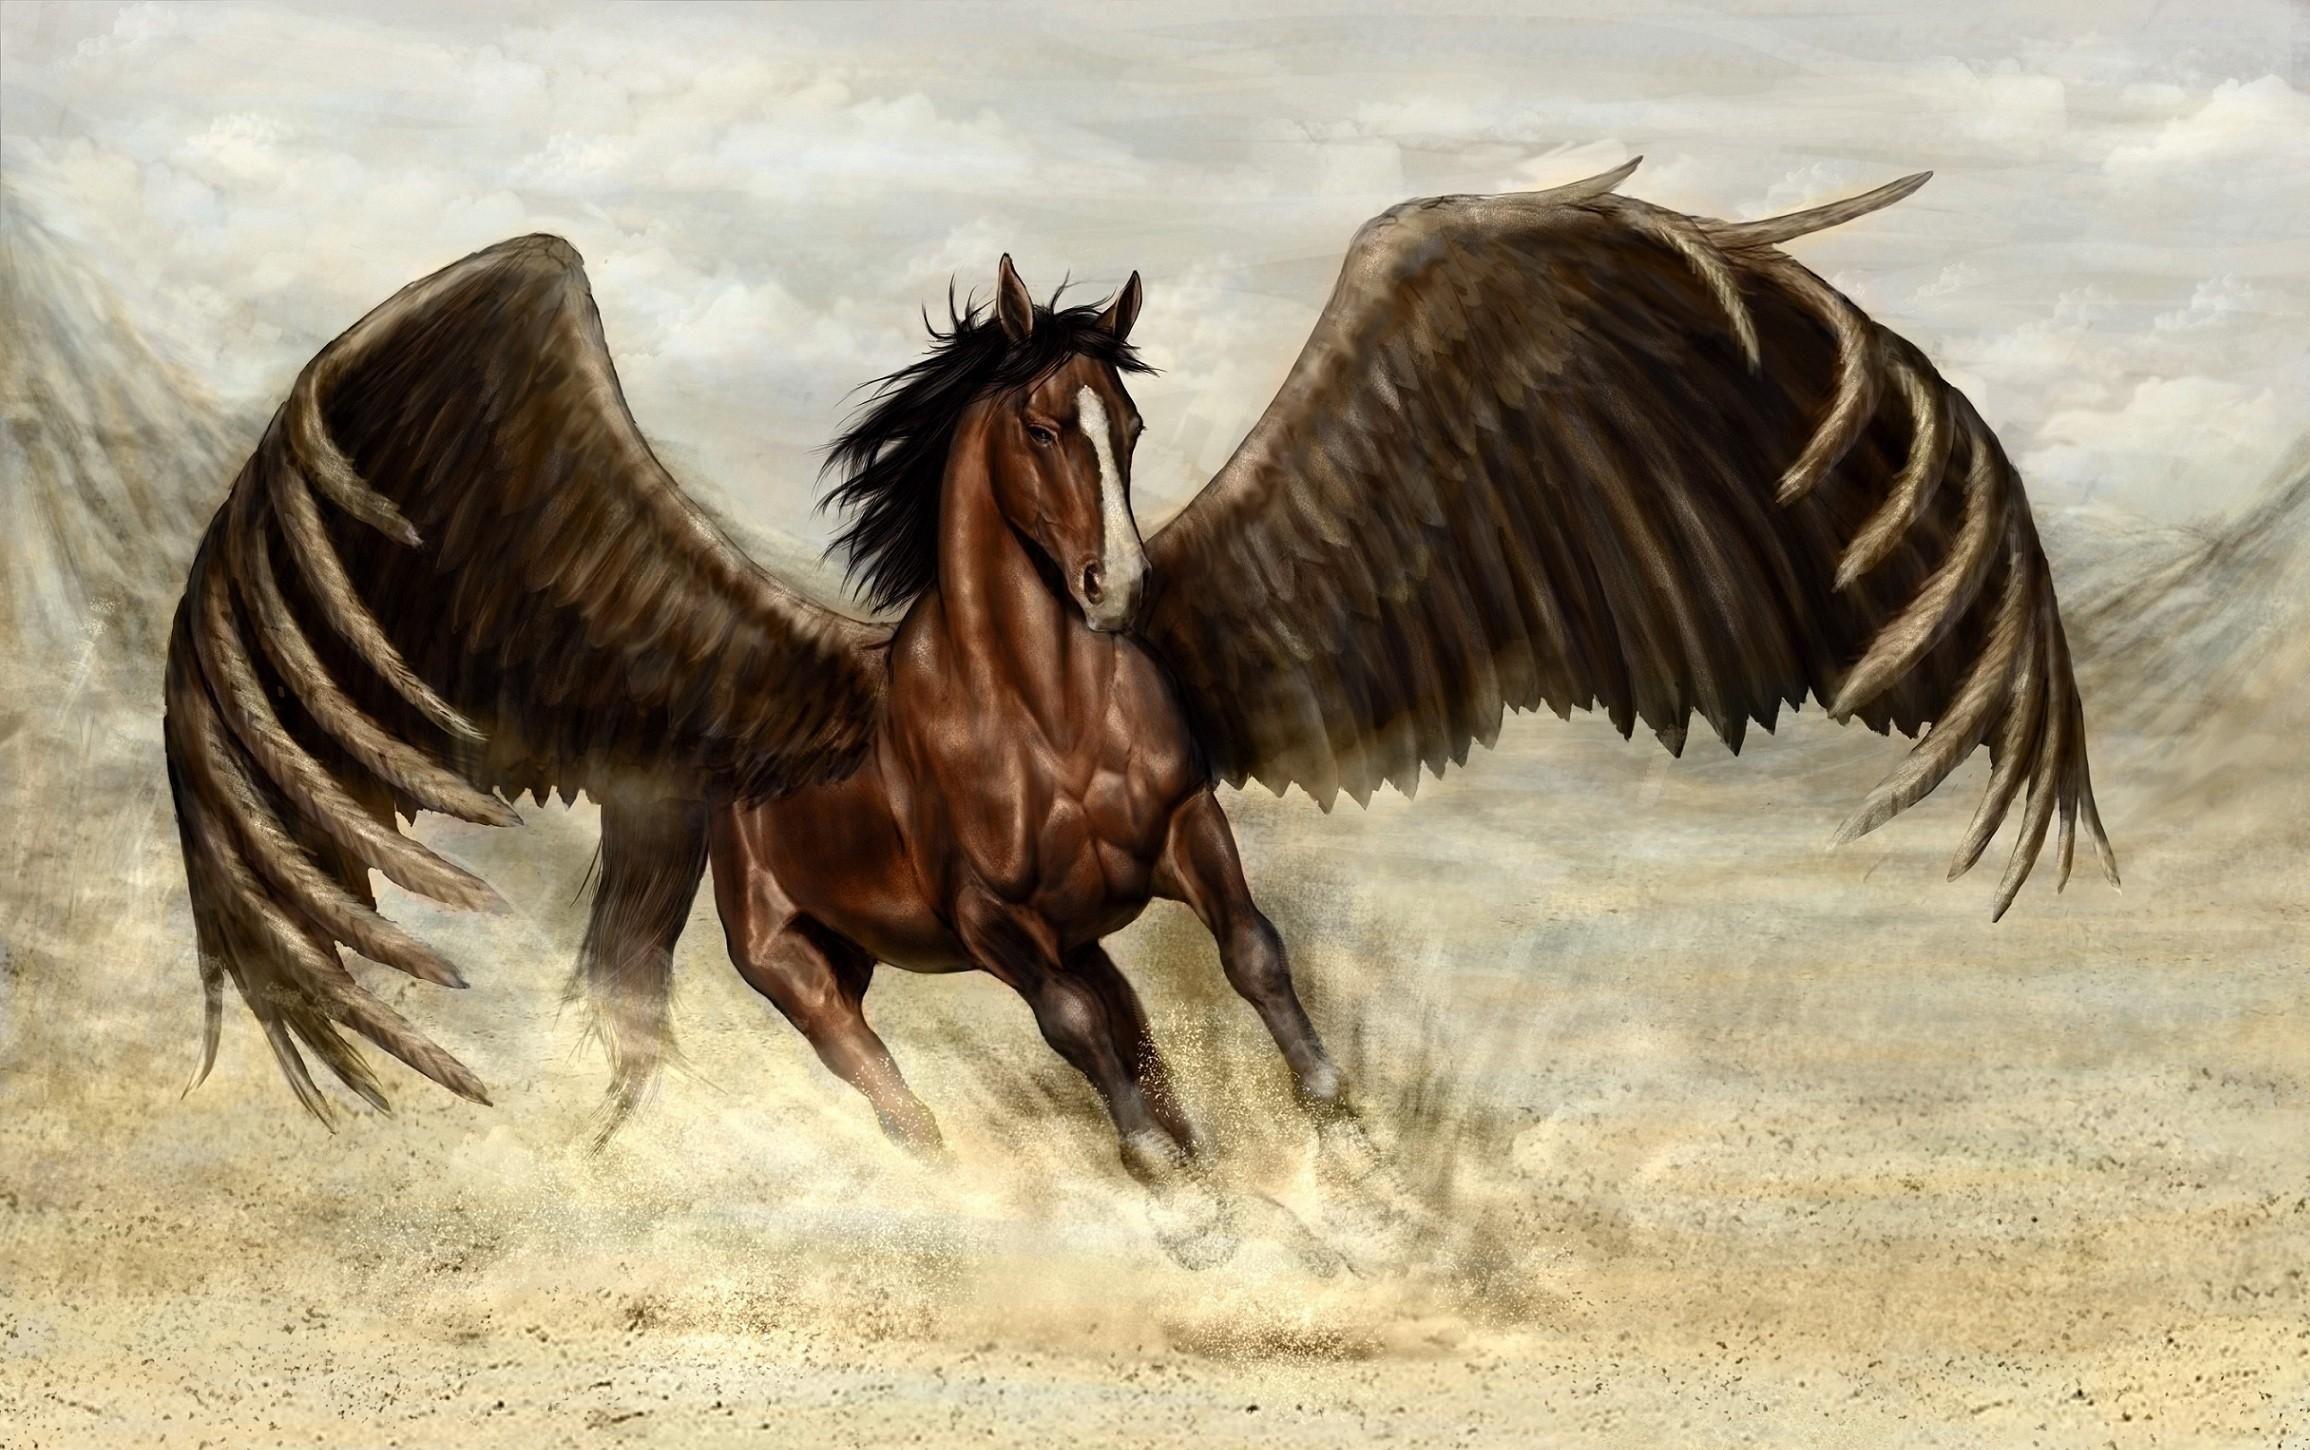 Download wallpaper 2310x1450 pegasus, horse, wings, sand HD background